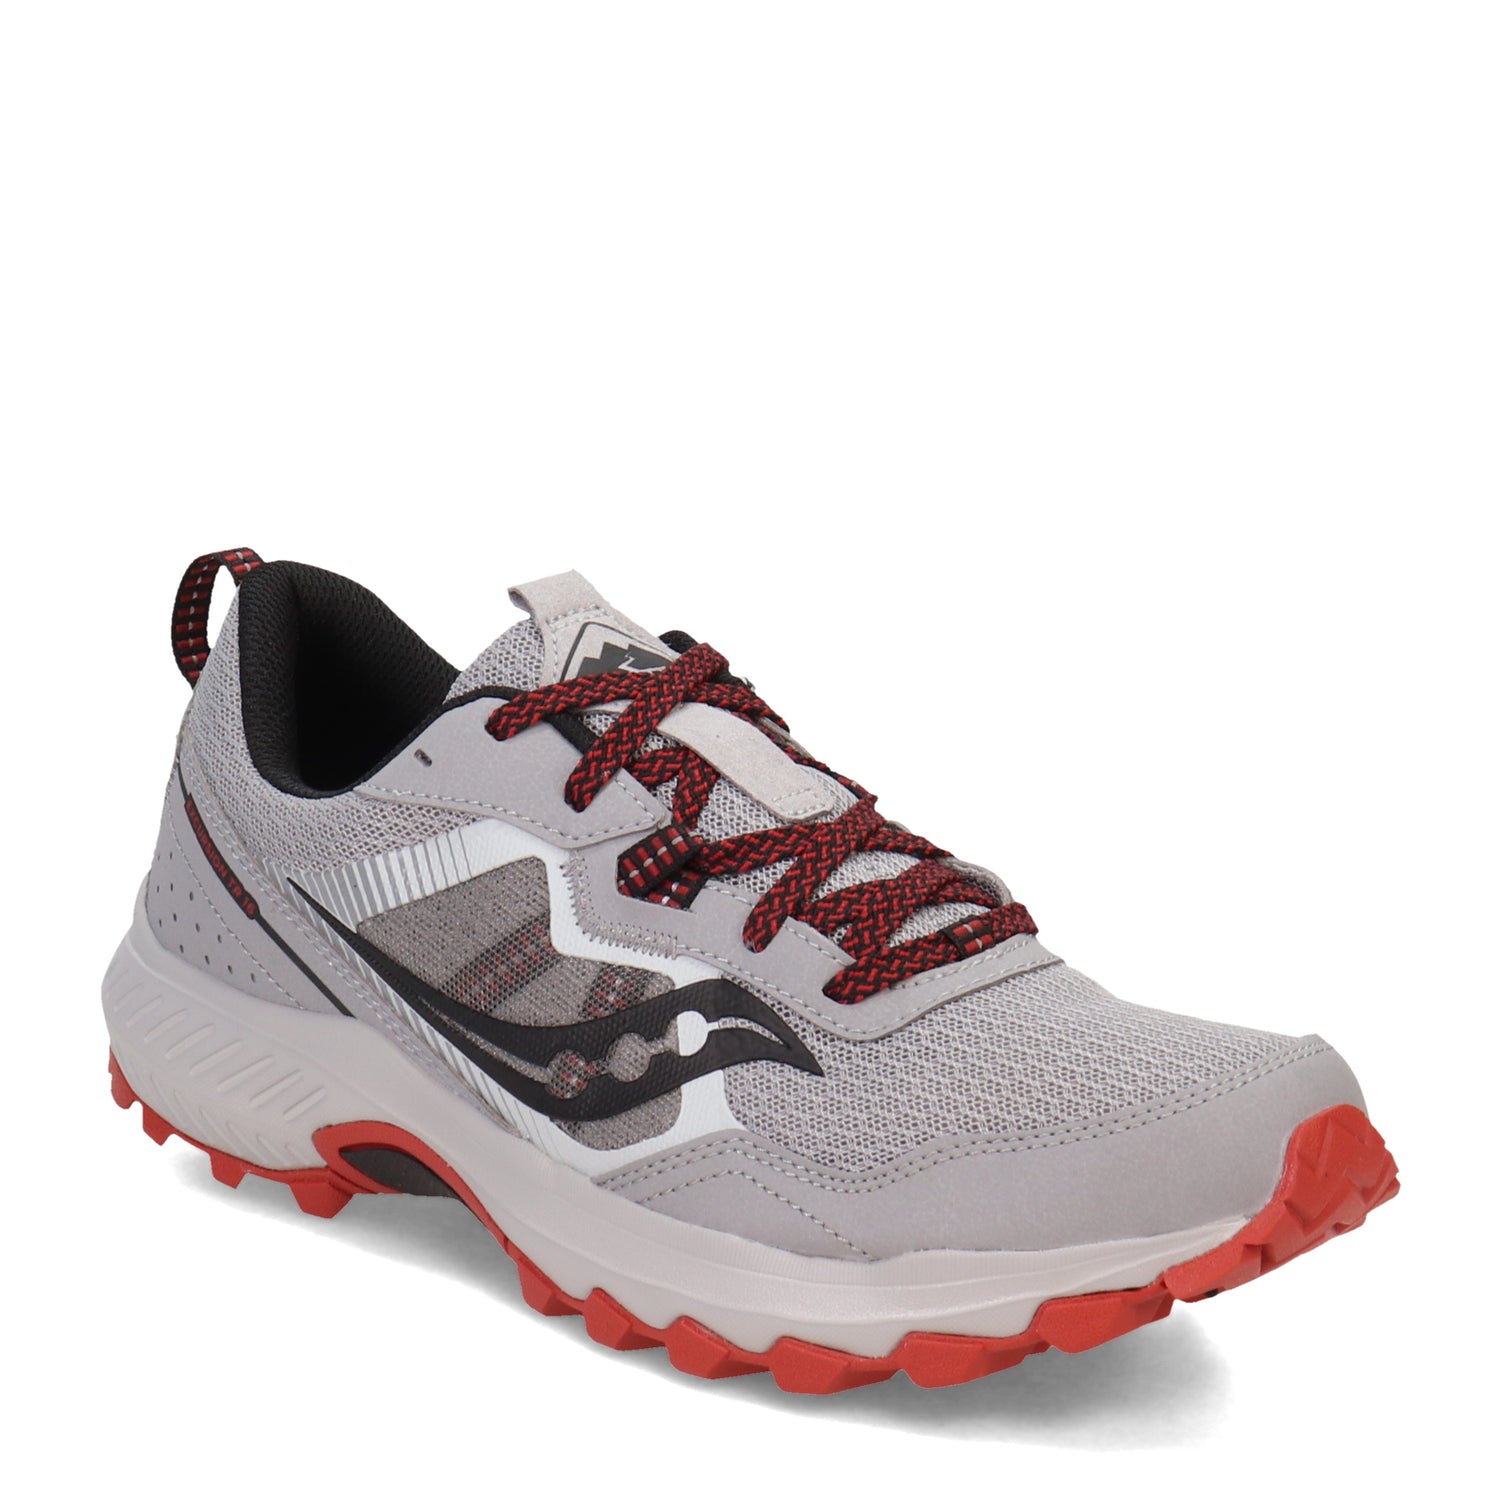 Men's Saucony, TR16 Trail Running Shoe - Wide Width Peltz Shoes